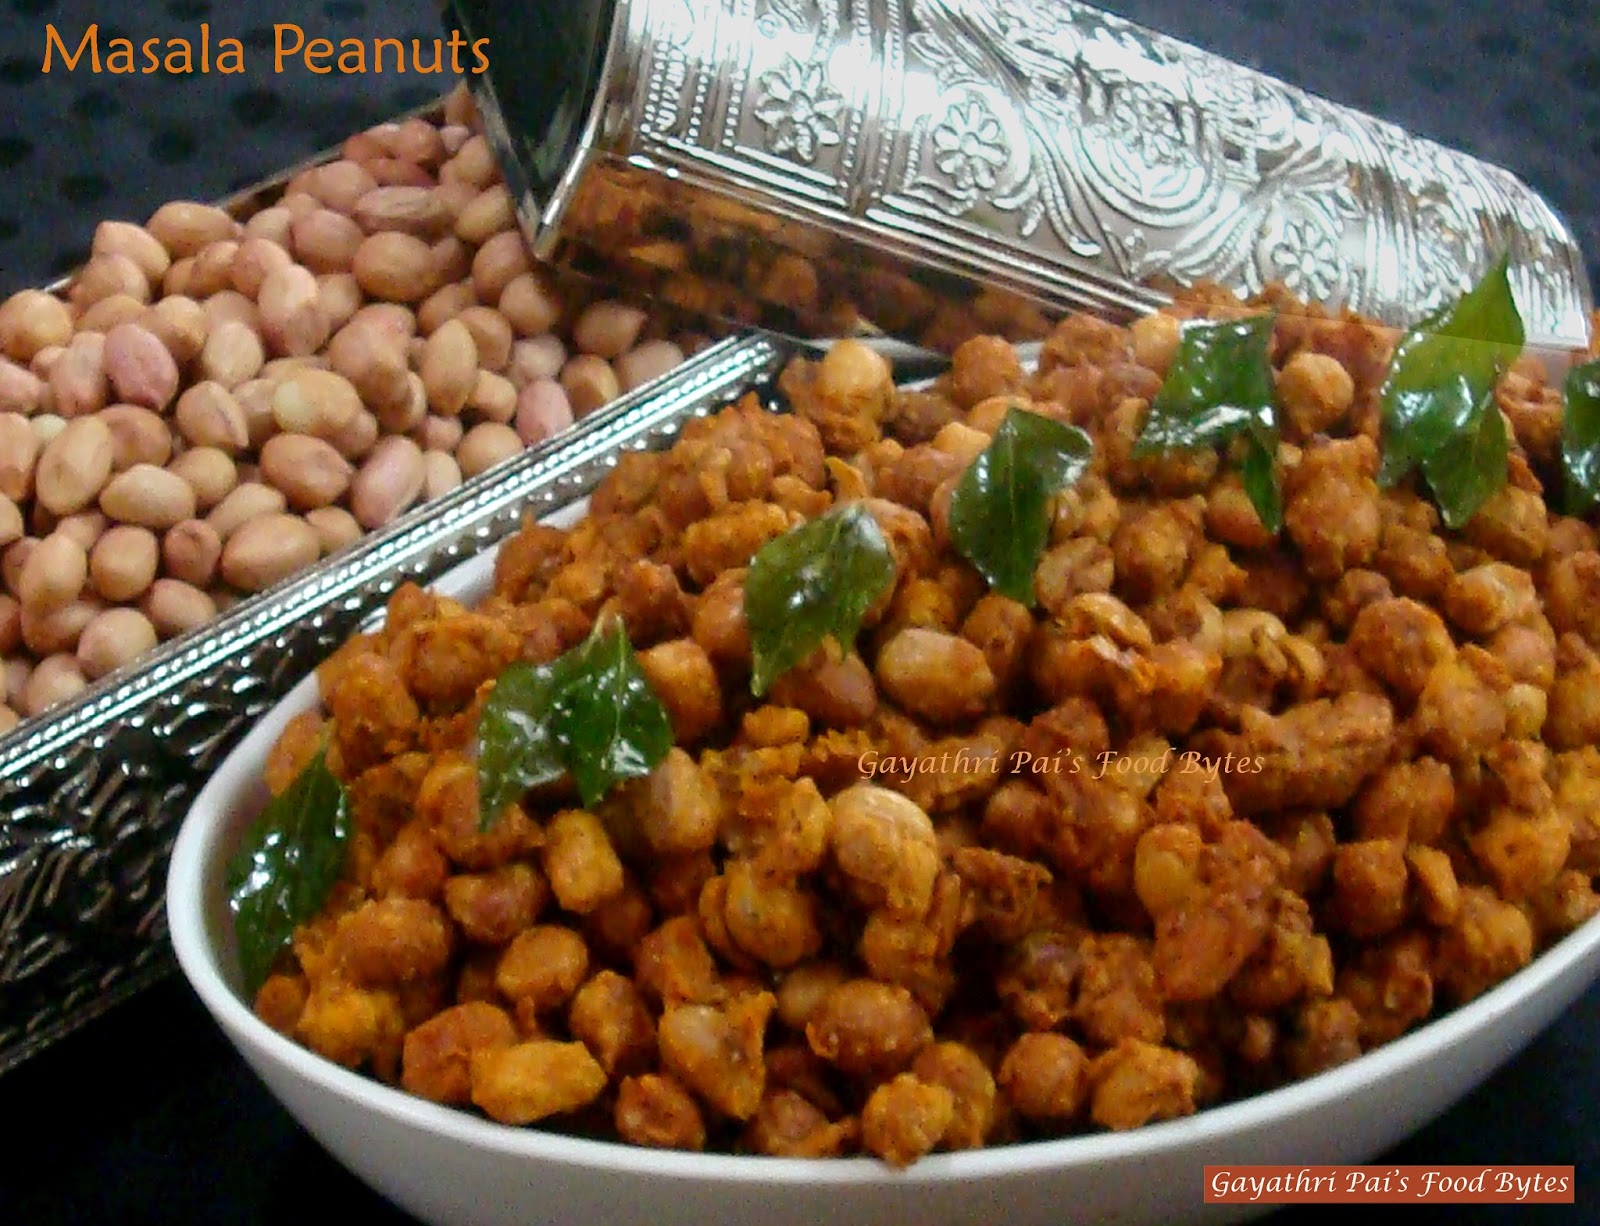 Gayathri Pai's Food Bytes: Masala Peanuts.